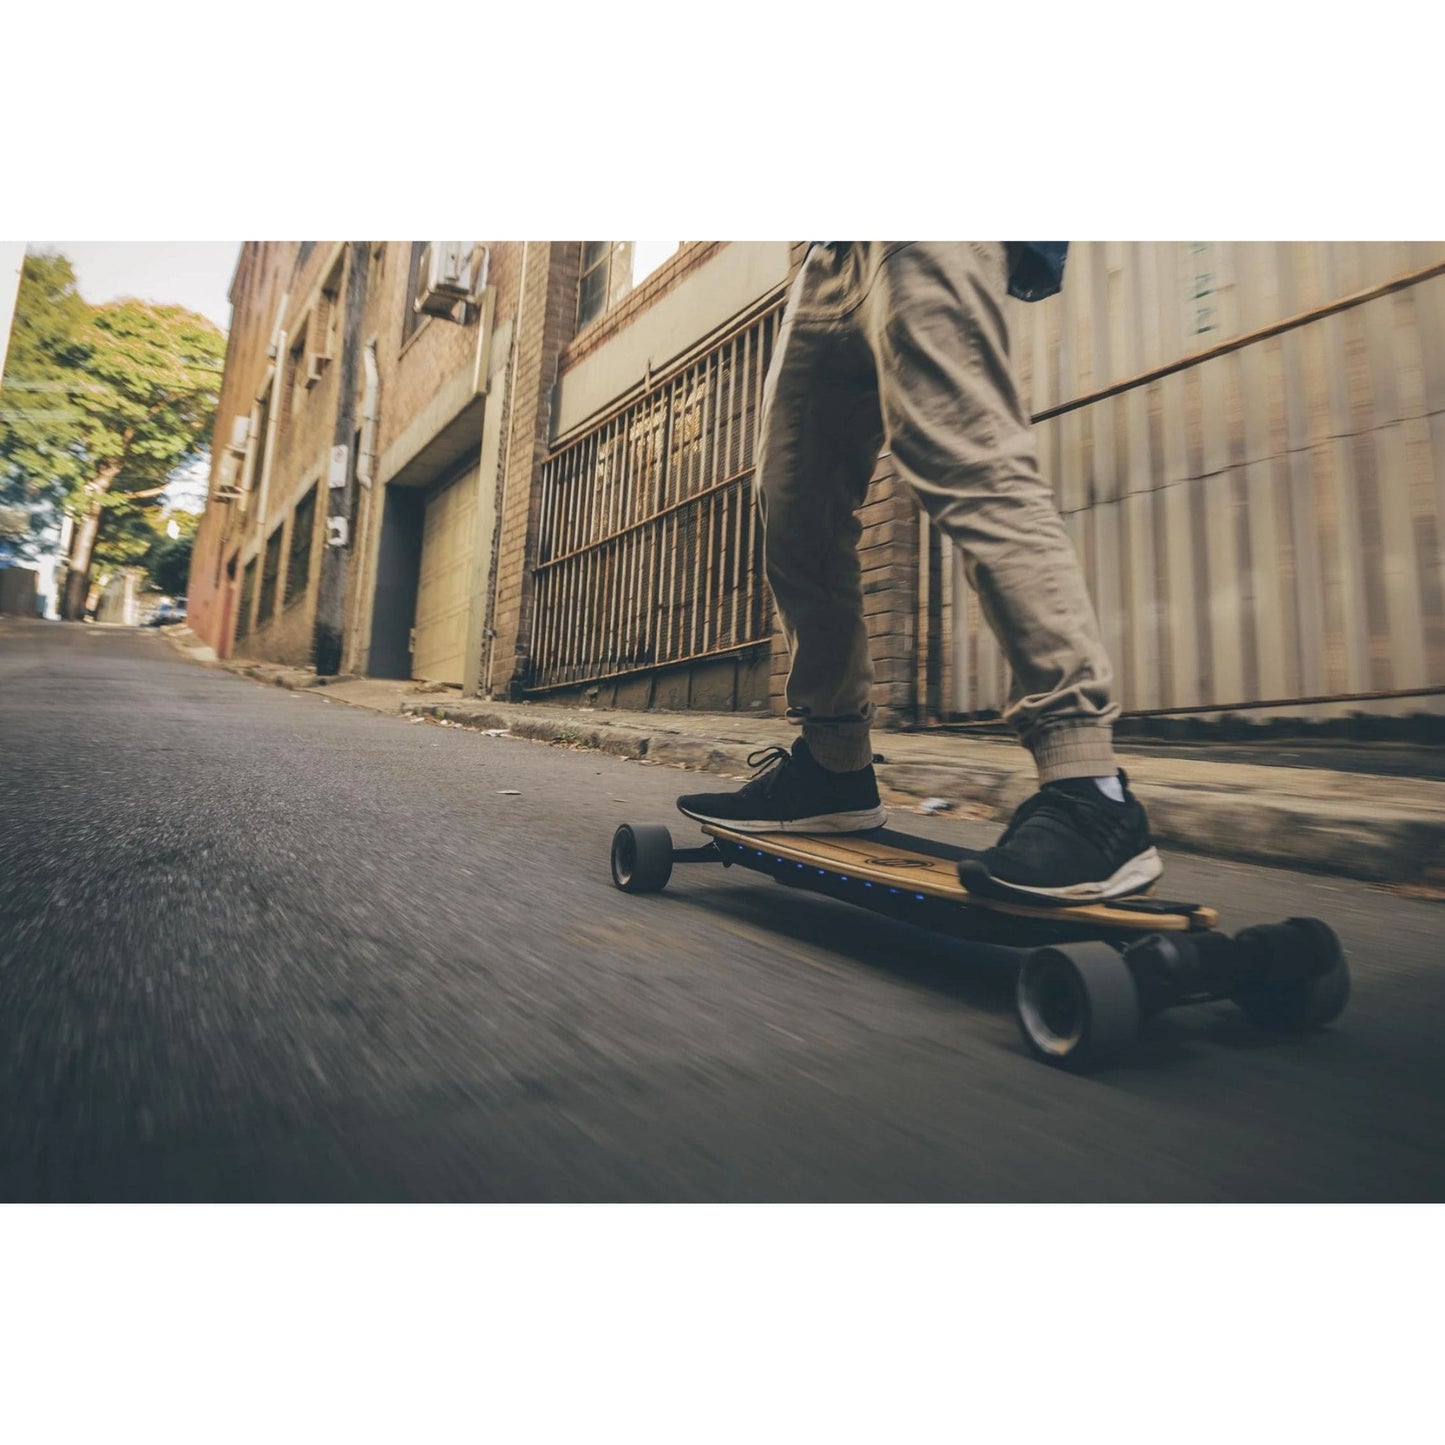 Evolve Bamboo GTR Street Electric Skateboard